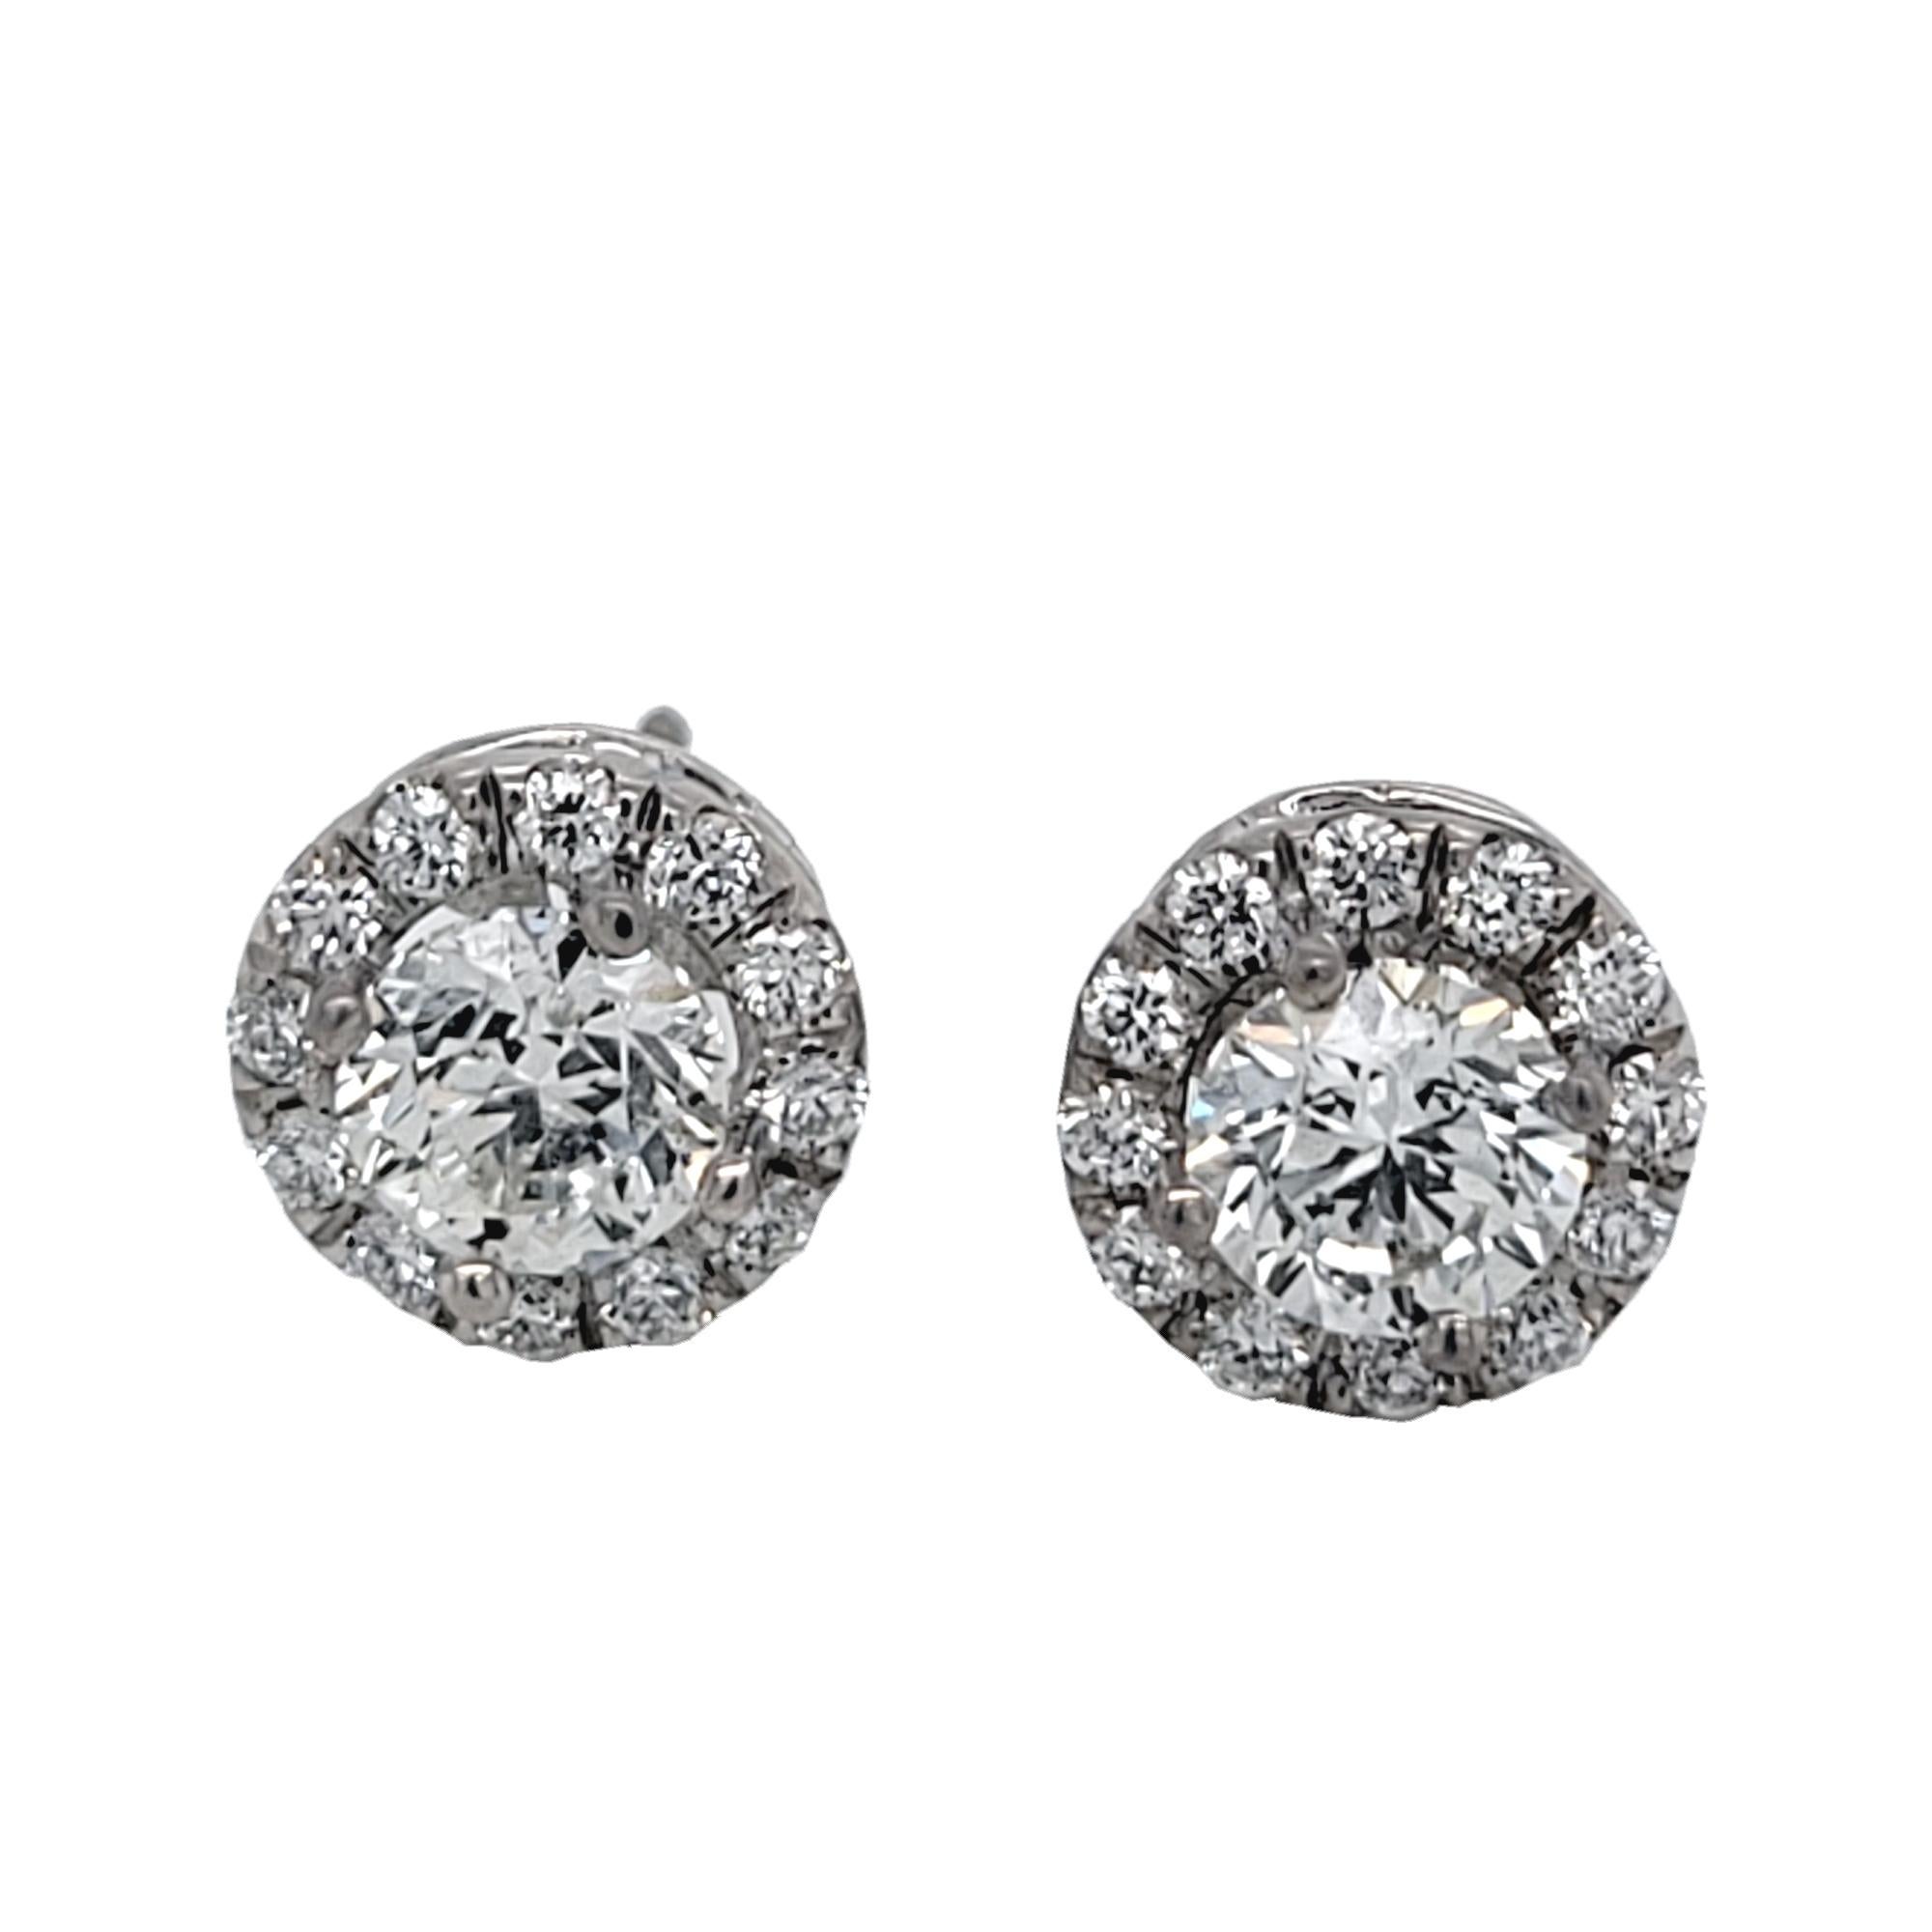 Contemporary 1.27 Carat 14 Karat Round Diamond Stud Earrings with Halo For Sale